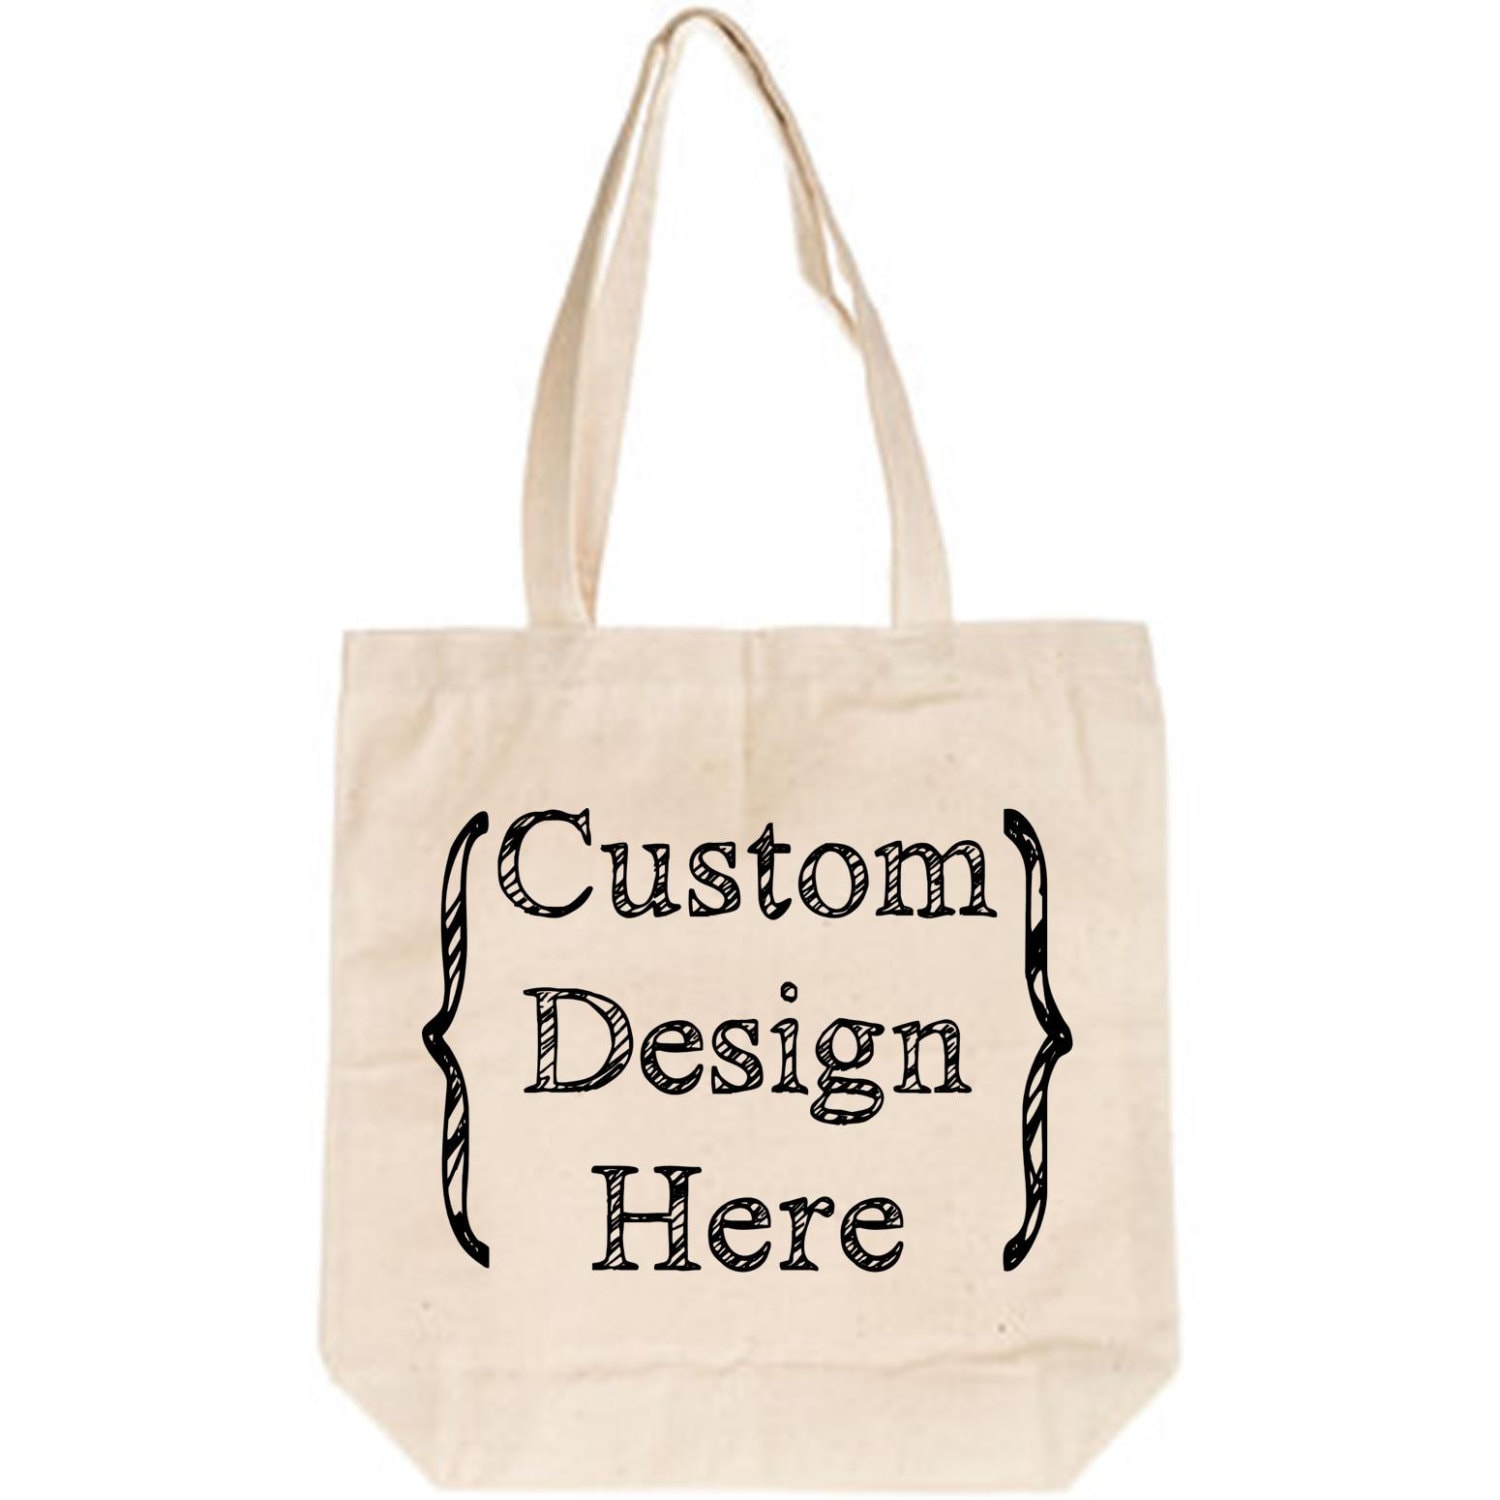 Custom Design Tote Bag by PolishedBumpkin on Etsy